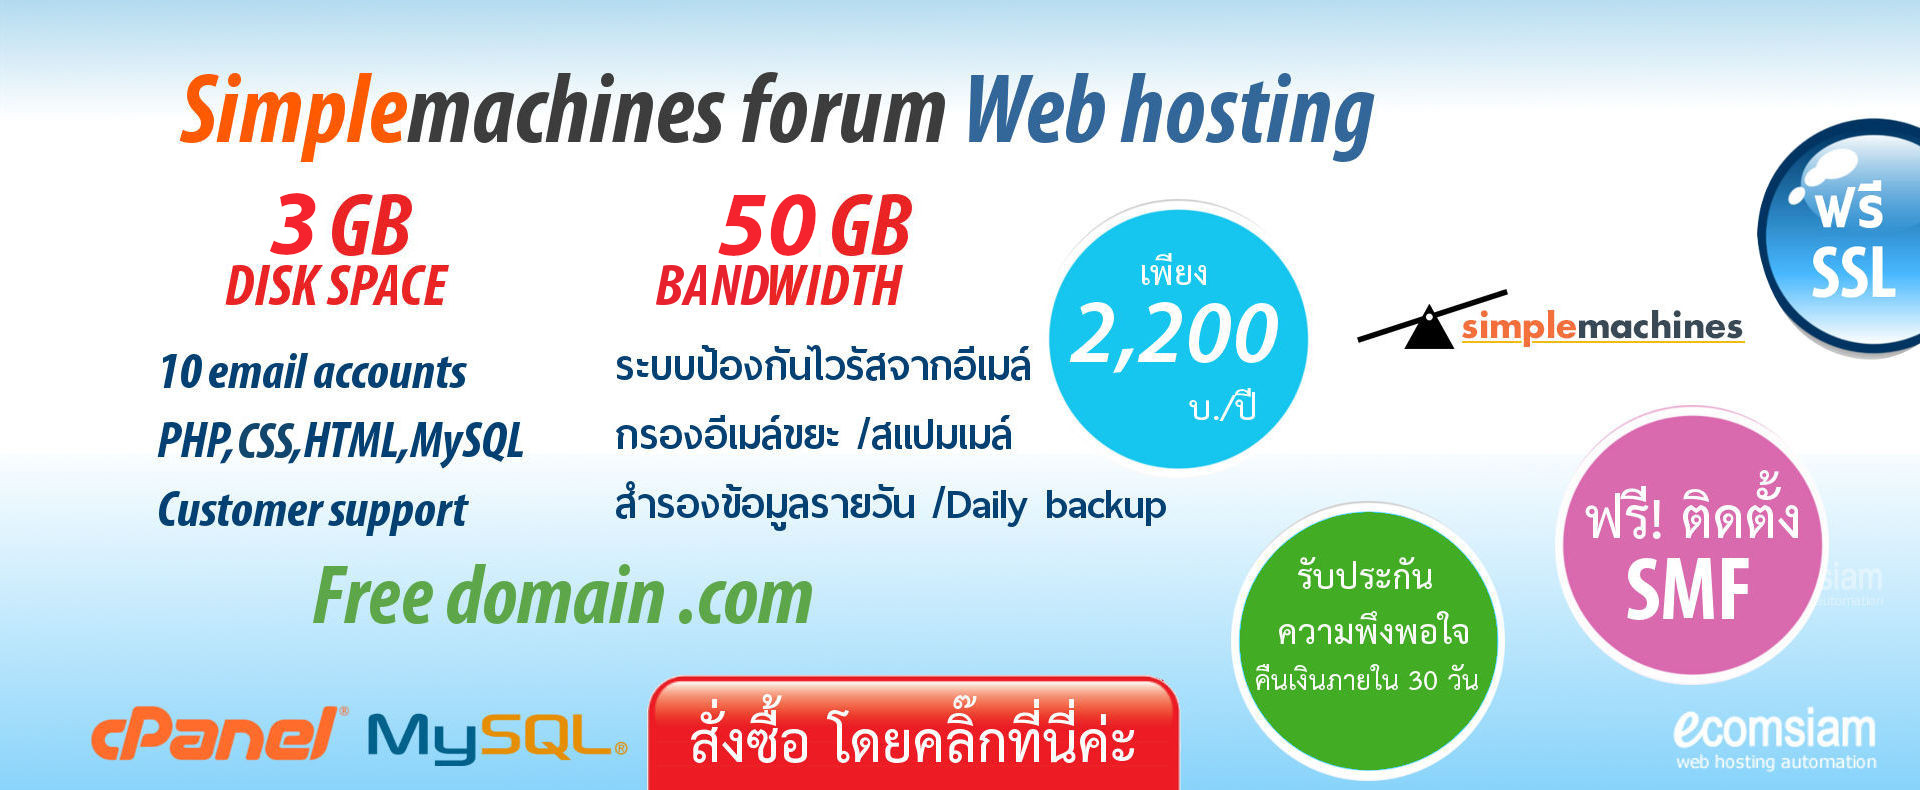 web hosting thai แนะนำ smf : simple machines forum web hosting thailand เพียง 2,200 บ./ปี เว็บโฮสติ้งไทย ฟรี โดเมน ฟรี SSL ฟรีติดตั้ง แนะนำเว็บโฮสติ้ง บริการลูกค้า  Support ดูแลดี โดย webhostthai.com - smf : simple machines forum web hosting thailand free domain